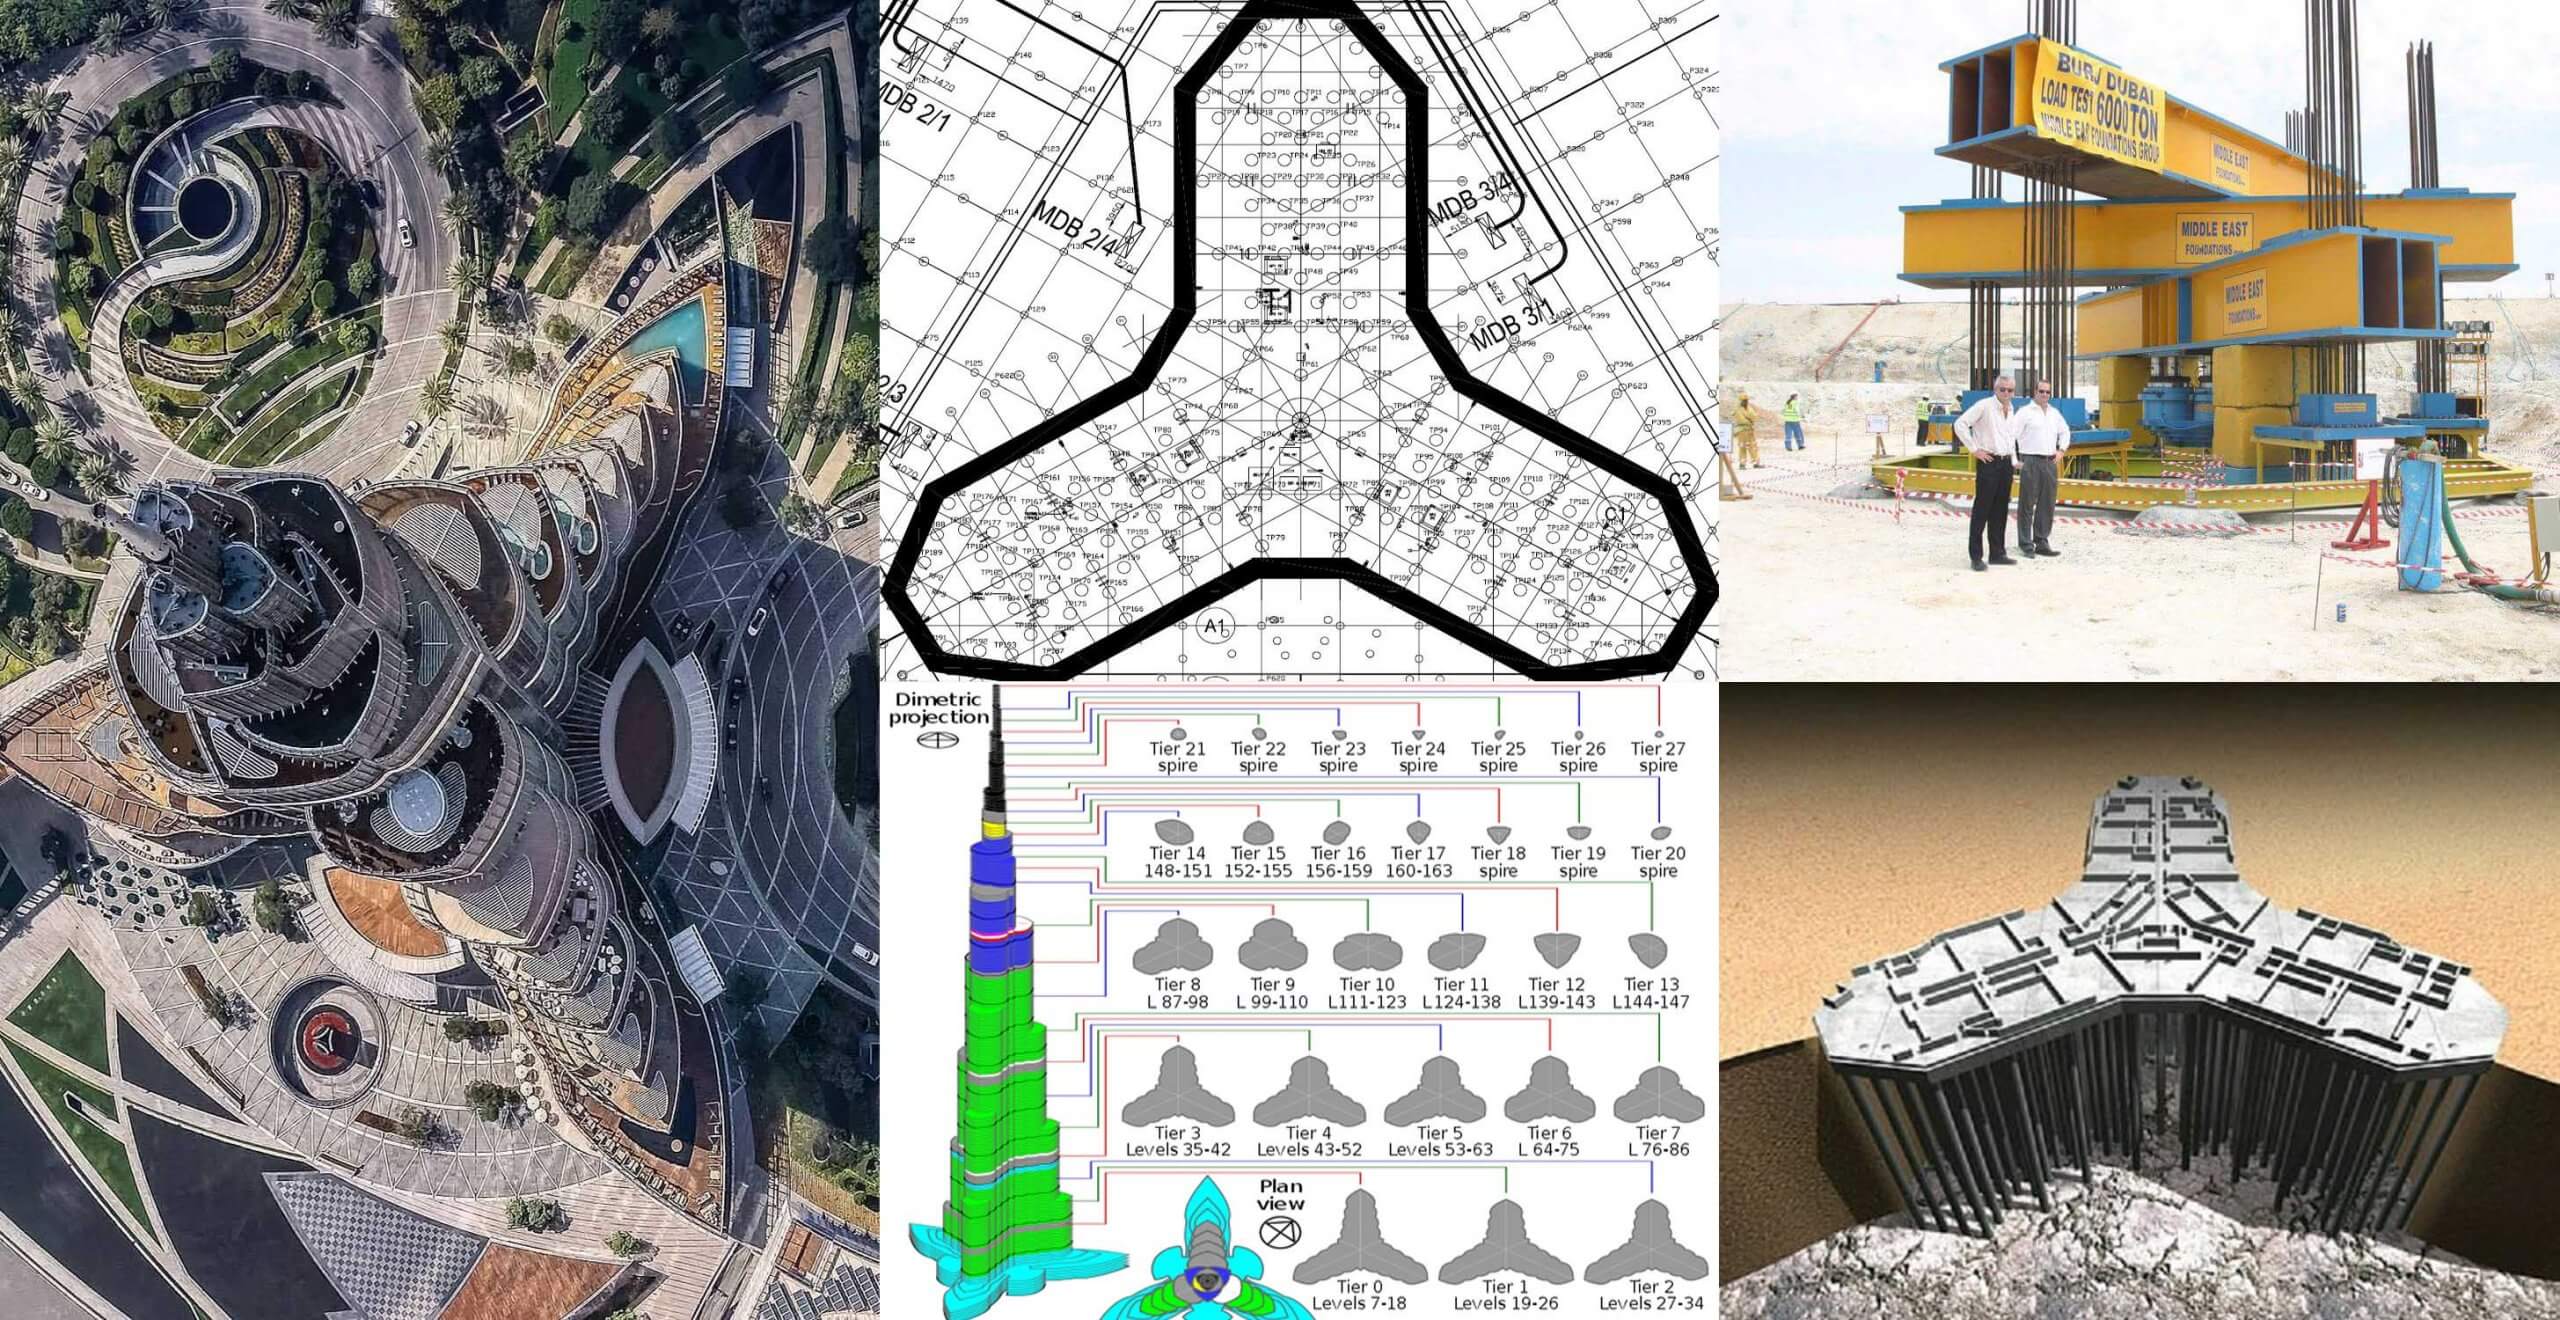 case study of burj khalifa